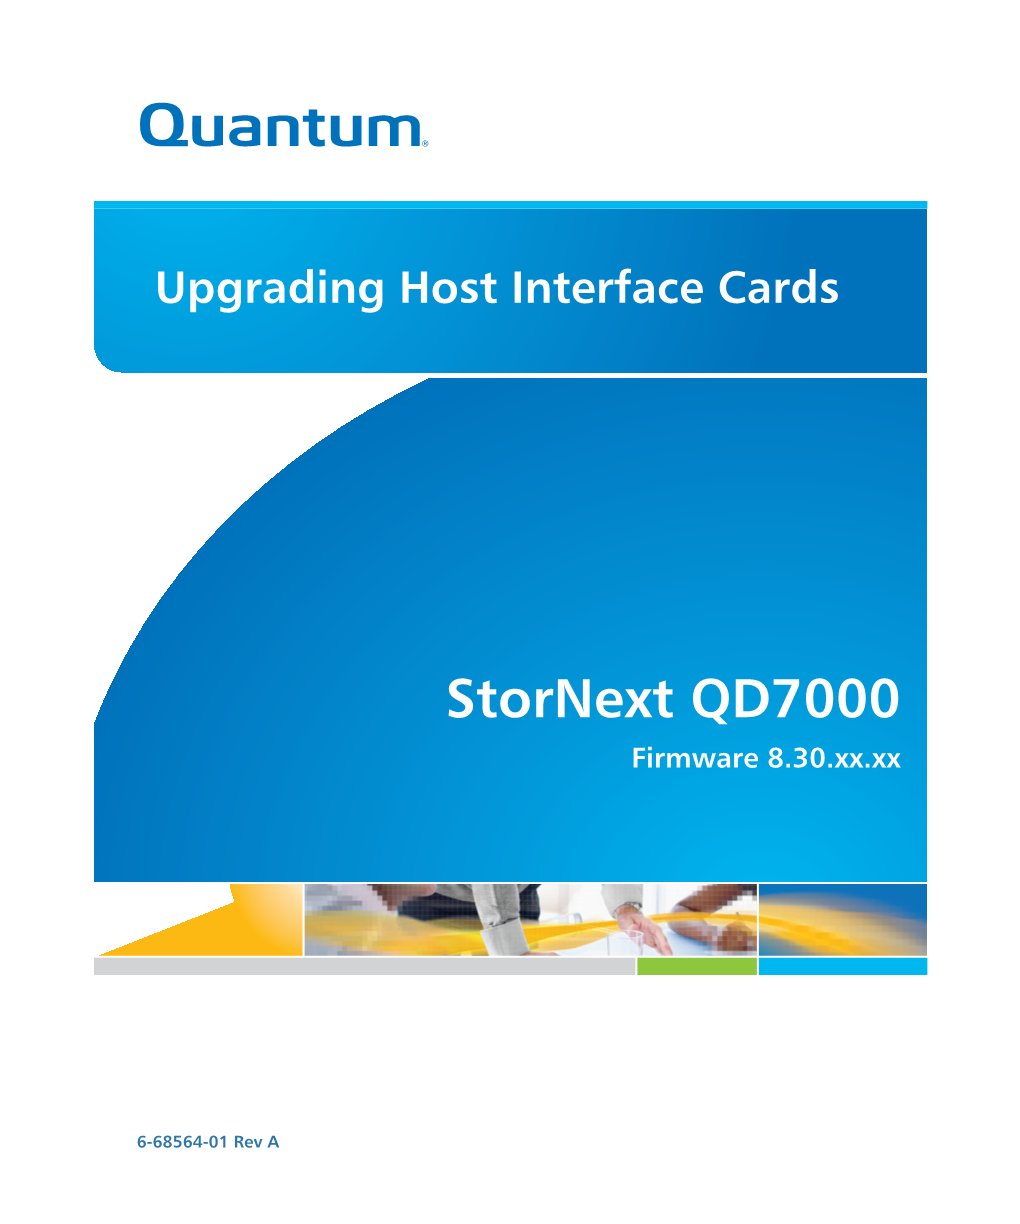 QD7000 Upgrading Host Interface Cards